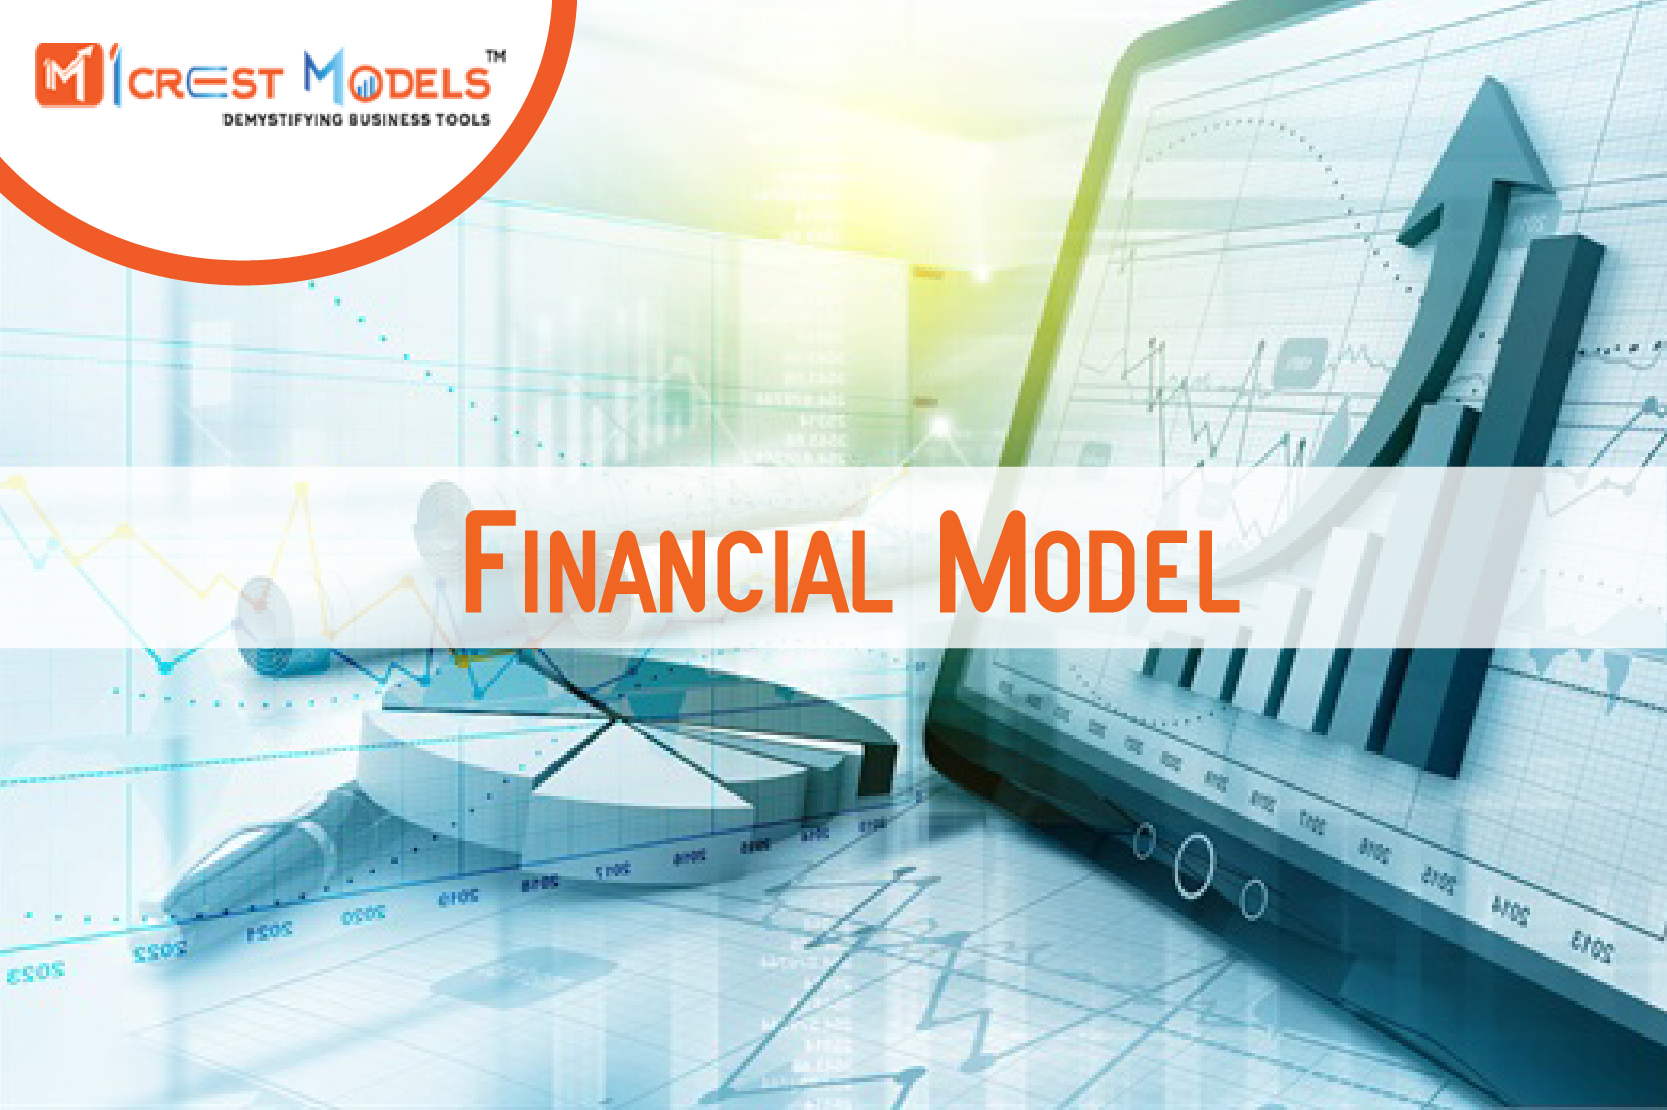 Financial Model Template